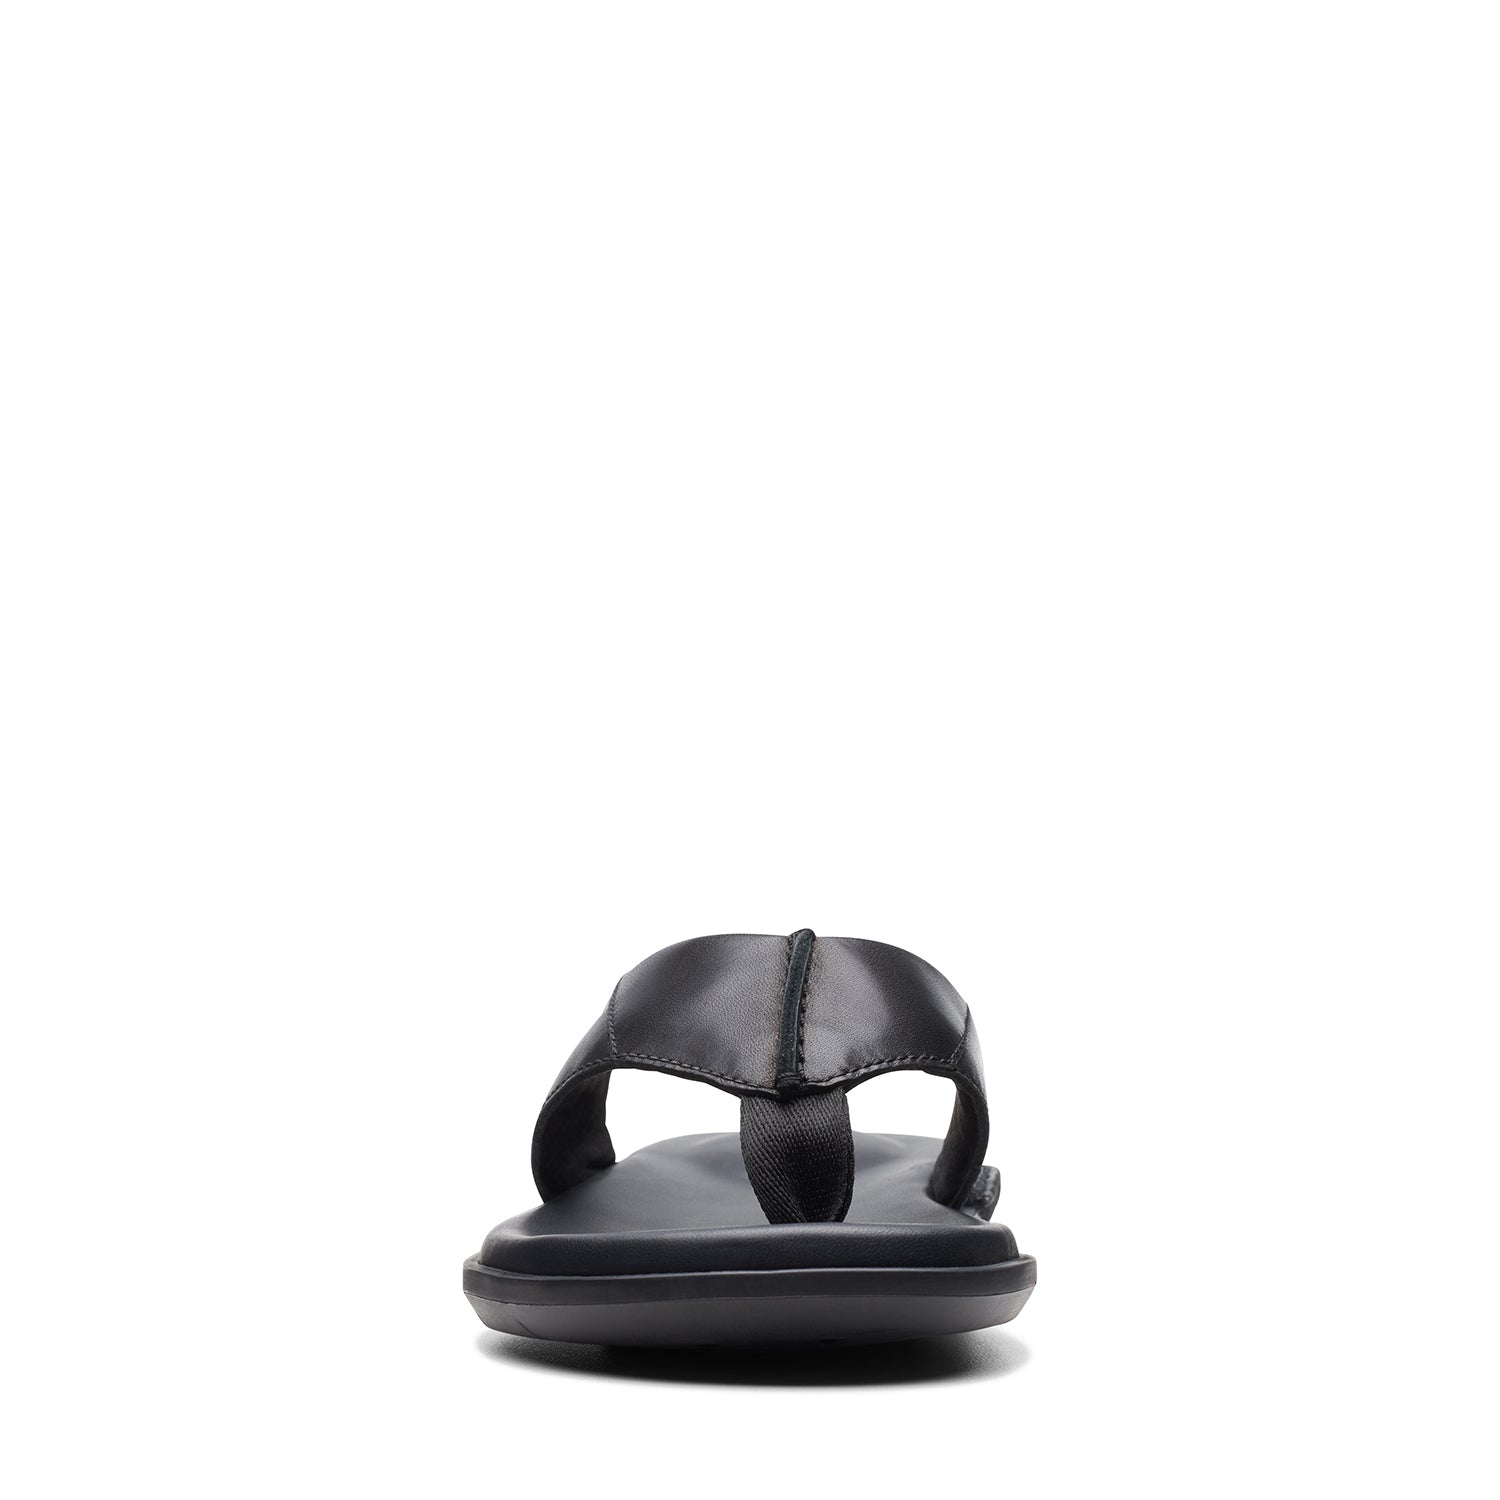 Clarks Penryn Post Sandals - Black Leather - 261745937 - G Width (Standard Fit)